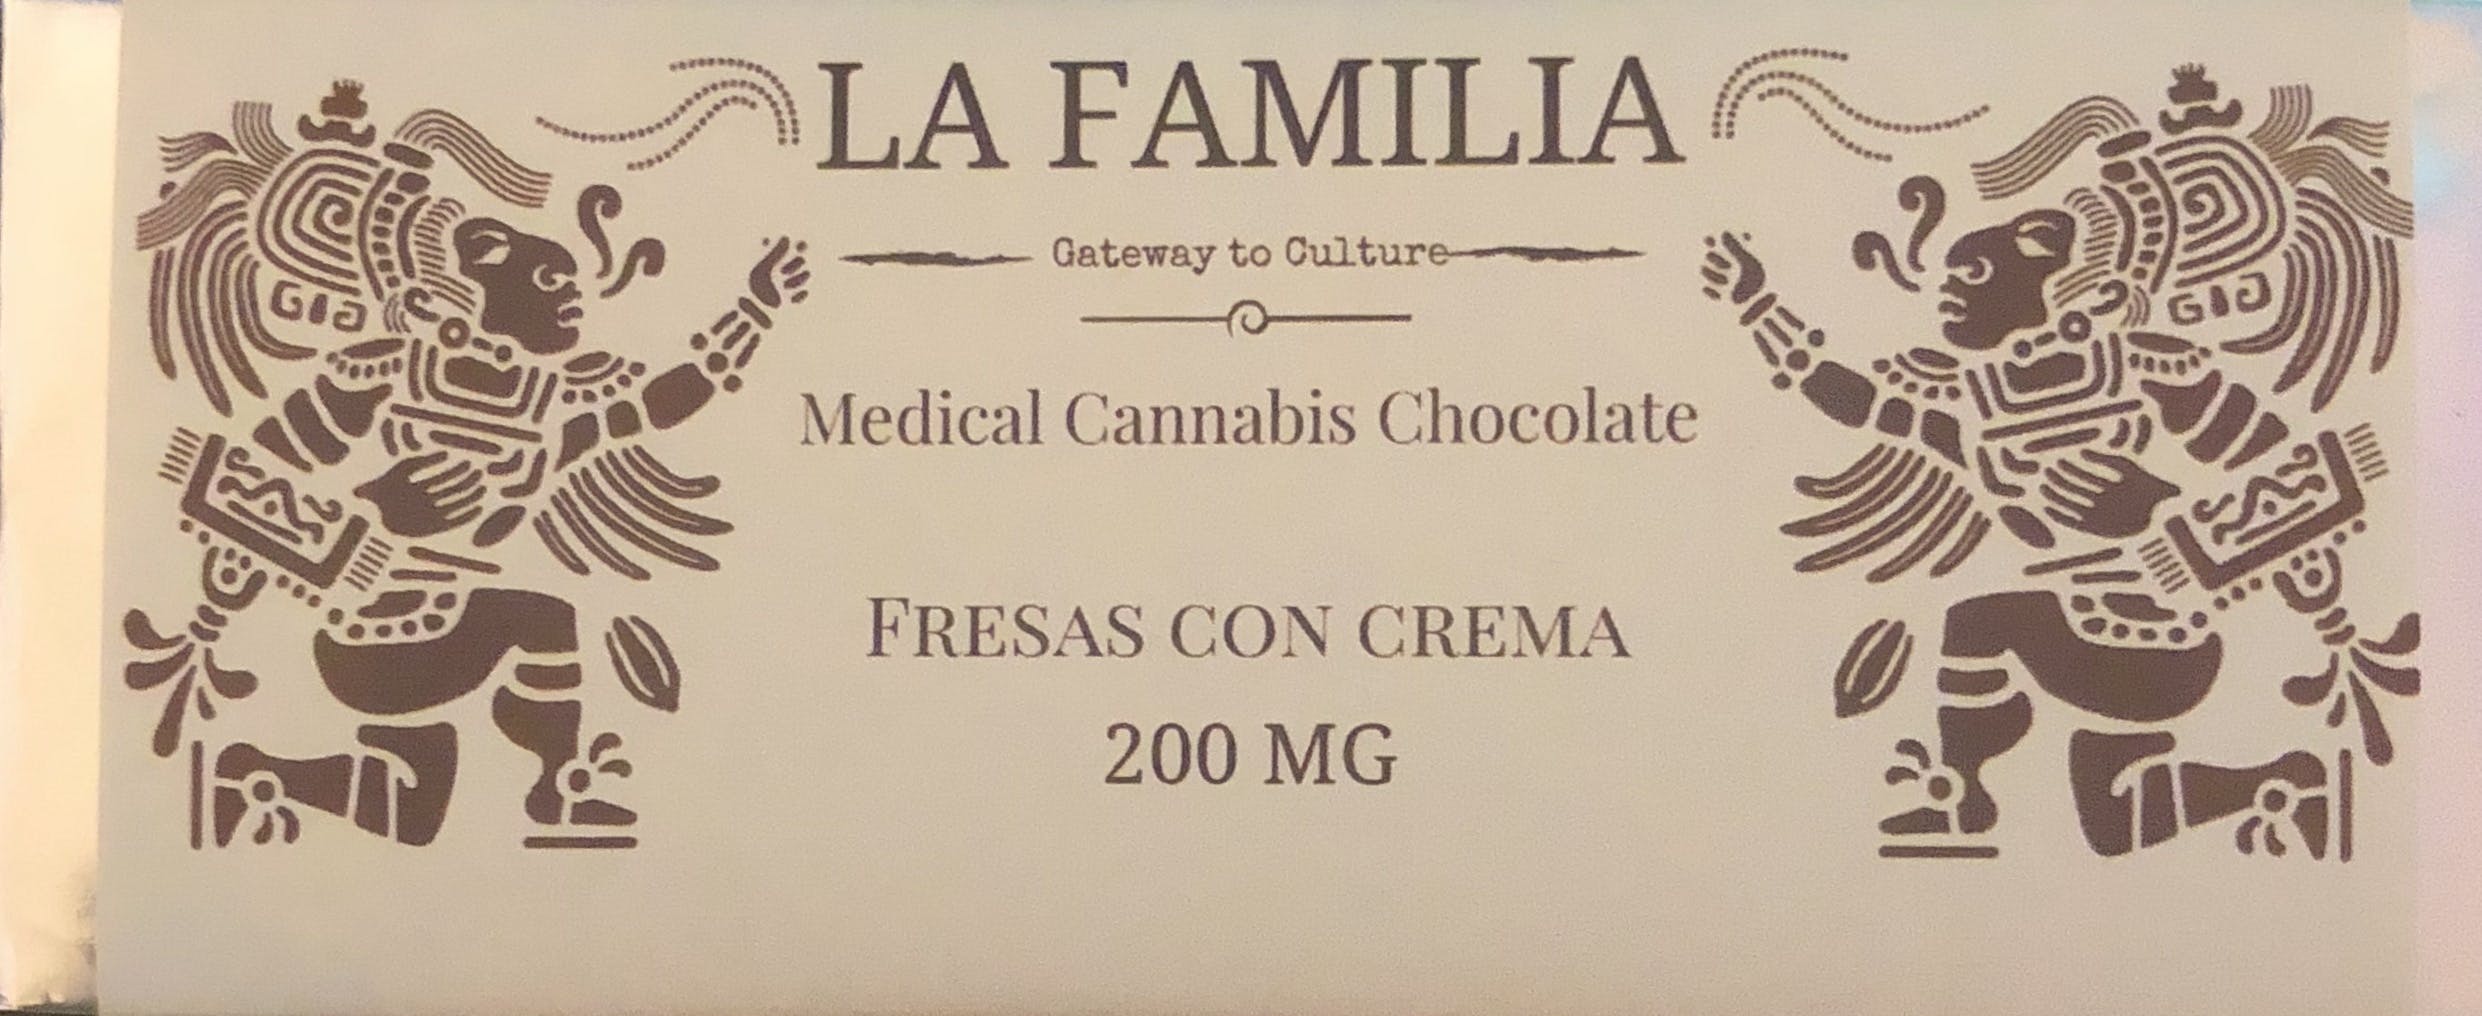 La Familia 200mg Fresas Con Crema